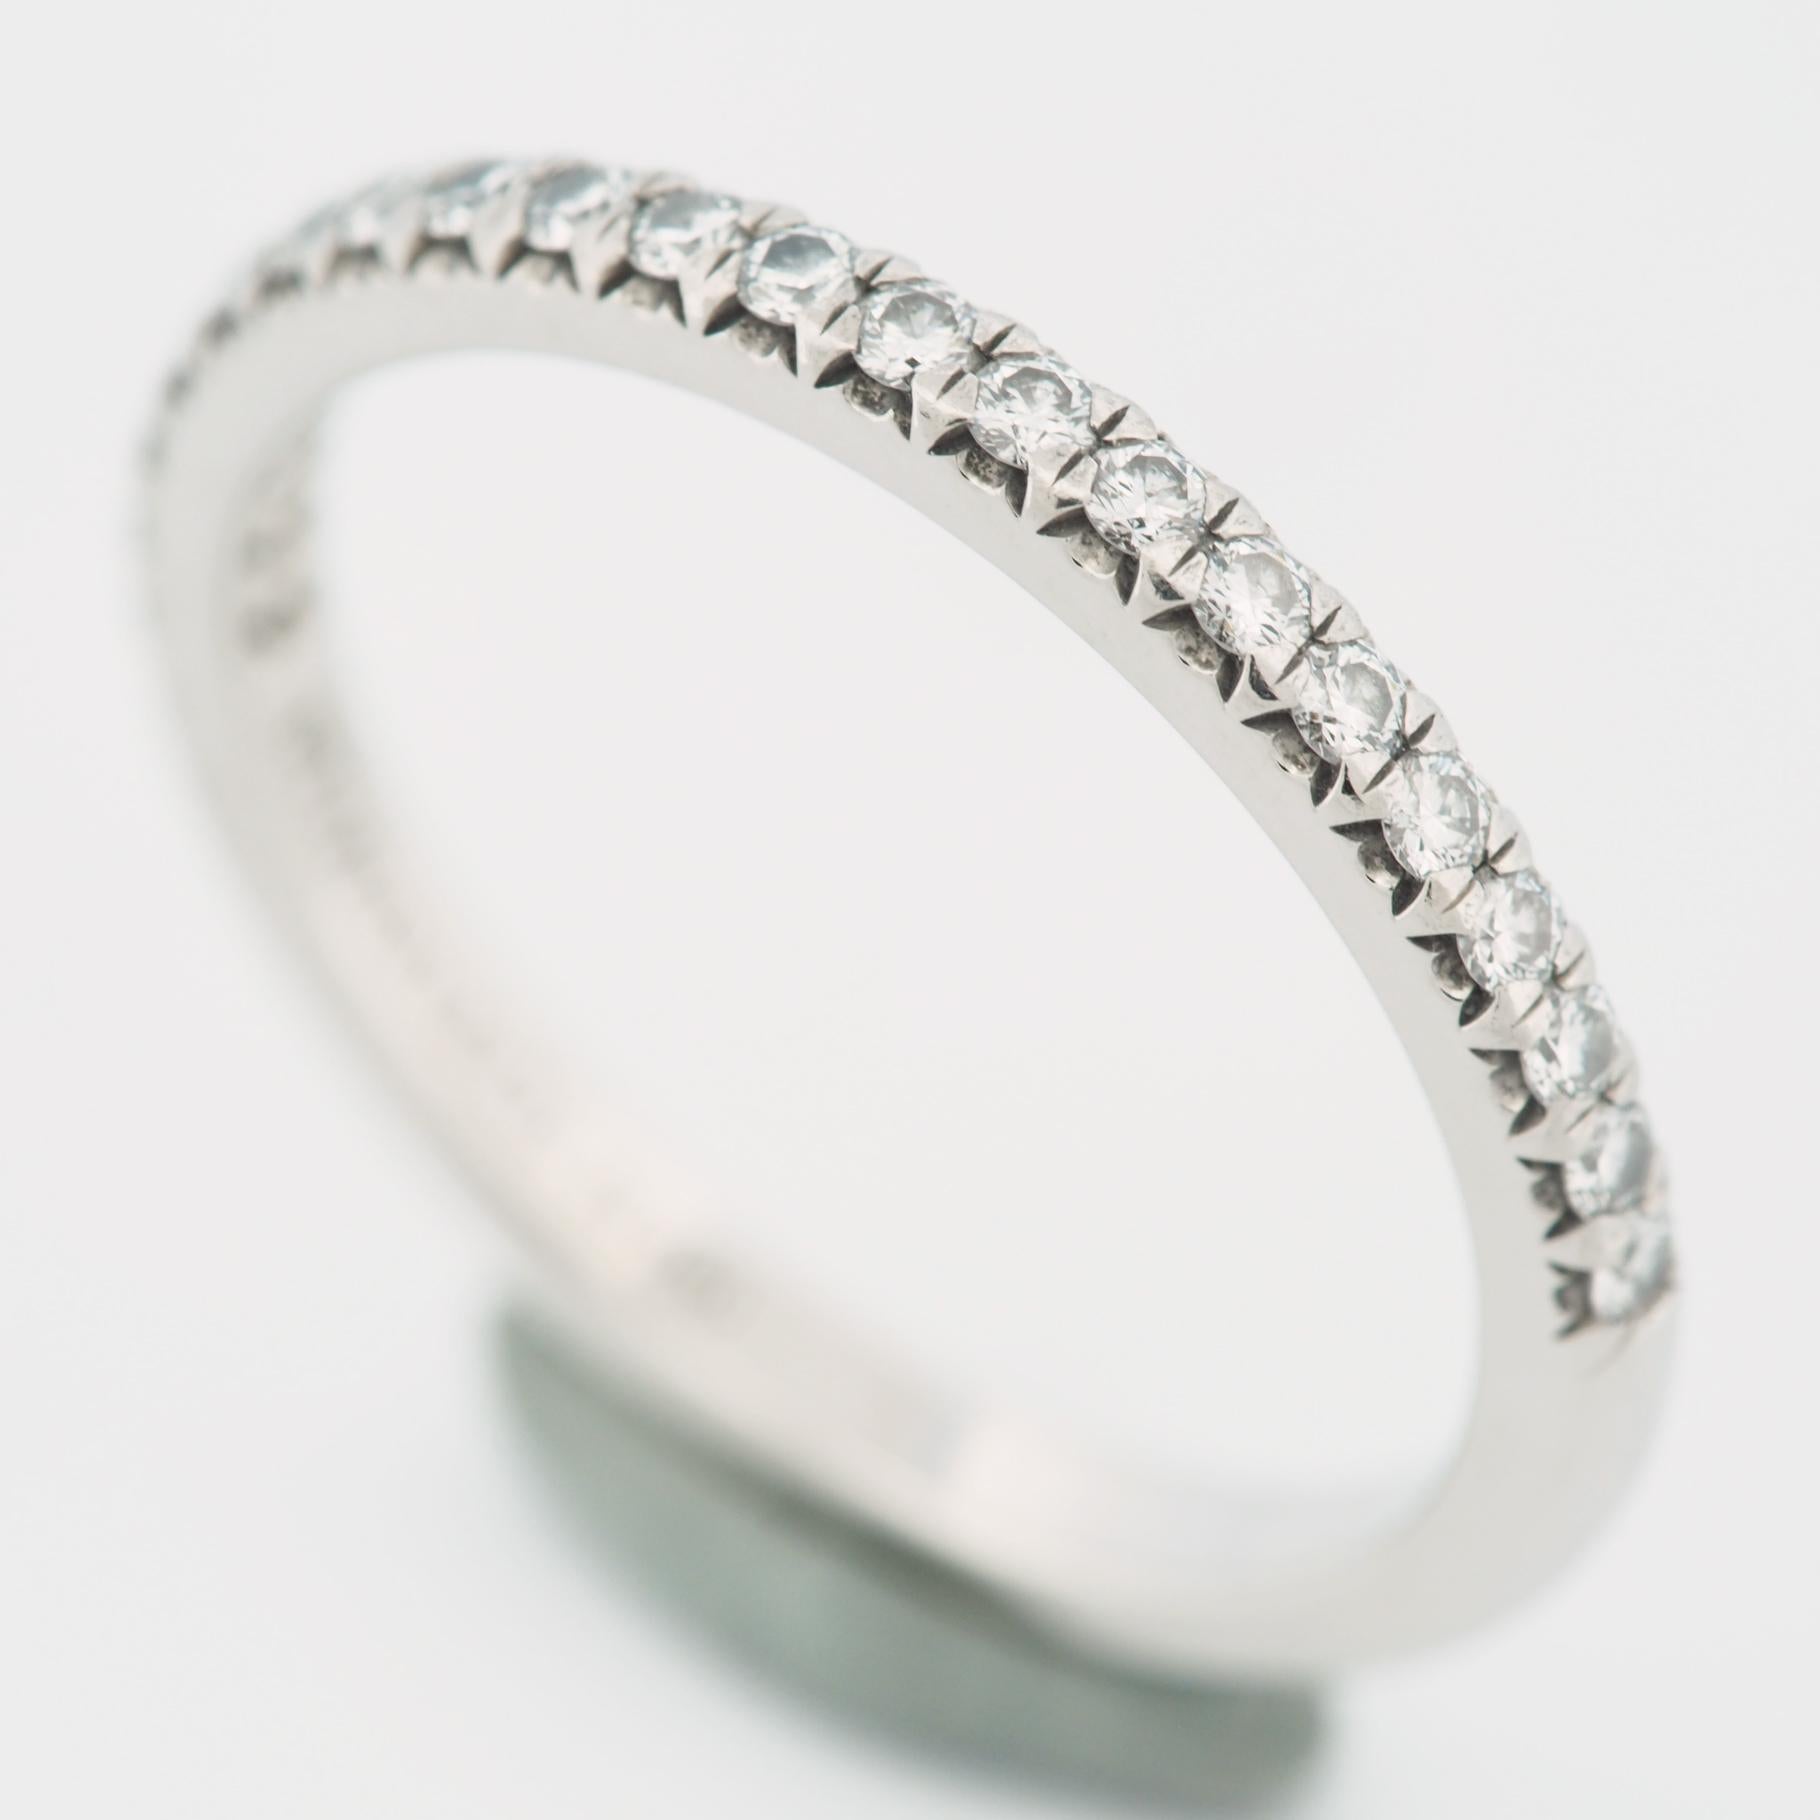 Item: Authentic Tiffany & Co. Soleste Half Eternity Diamonds Ring
Stones: Diamond ( 0.17ct )
Metal: Platinum 950
Ring Size: US SIZE 5.25 UK SIZE K
Internal Diameter: 16.00 mm
Measurement: 2.0 mm width
Weight: 3.1 Grams
Condition: Used